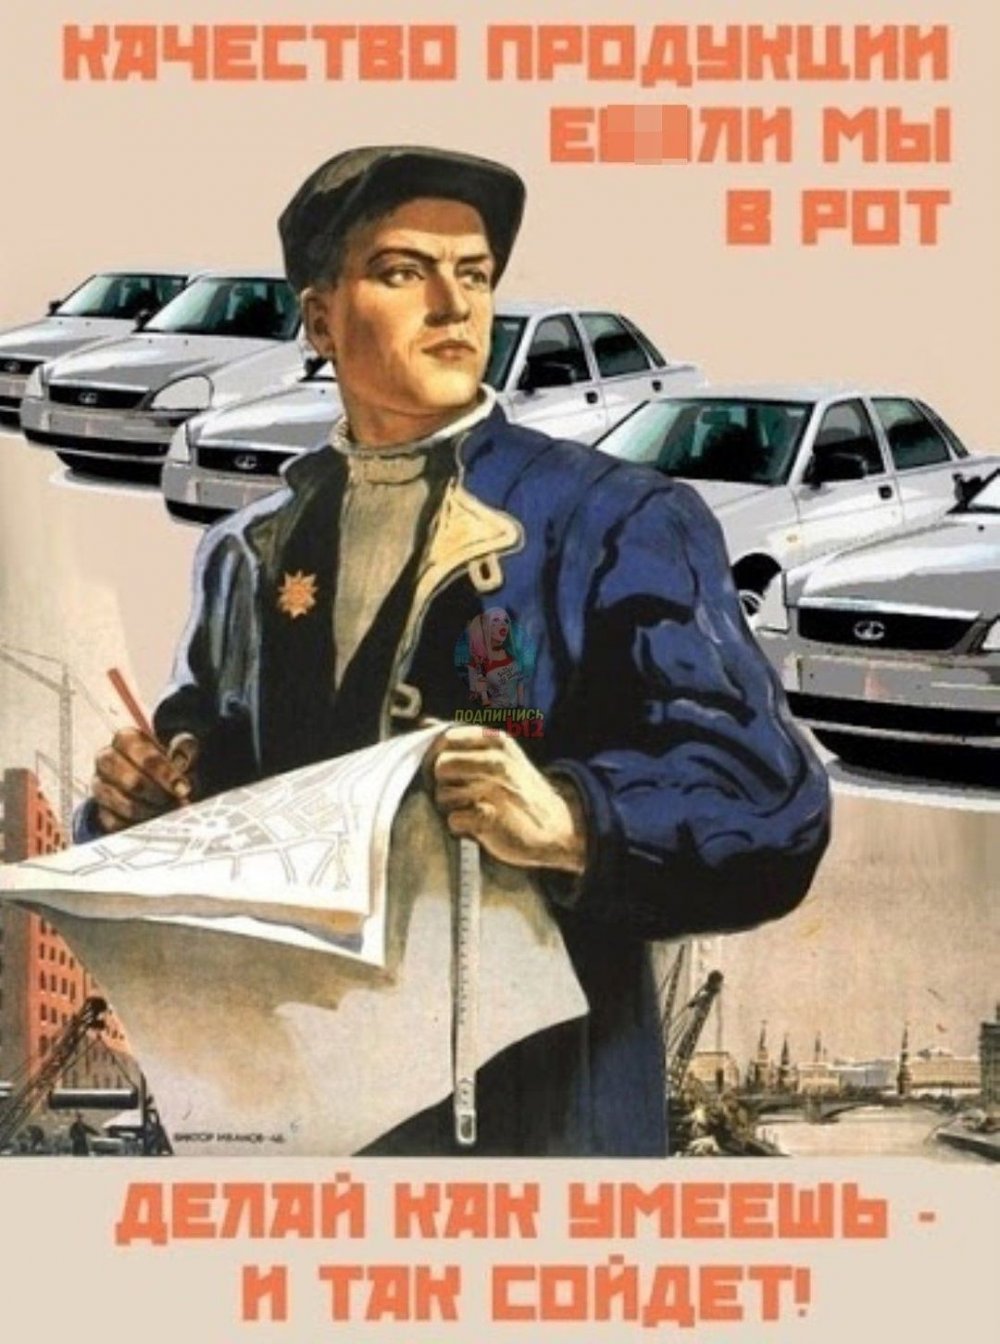 Советские агитплакаты на новый лад